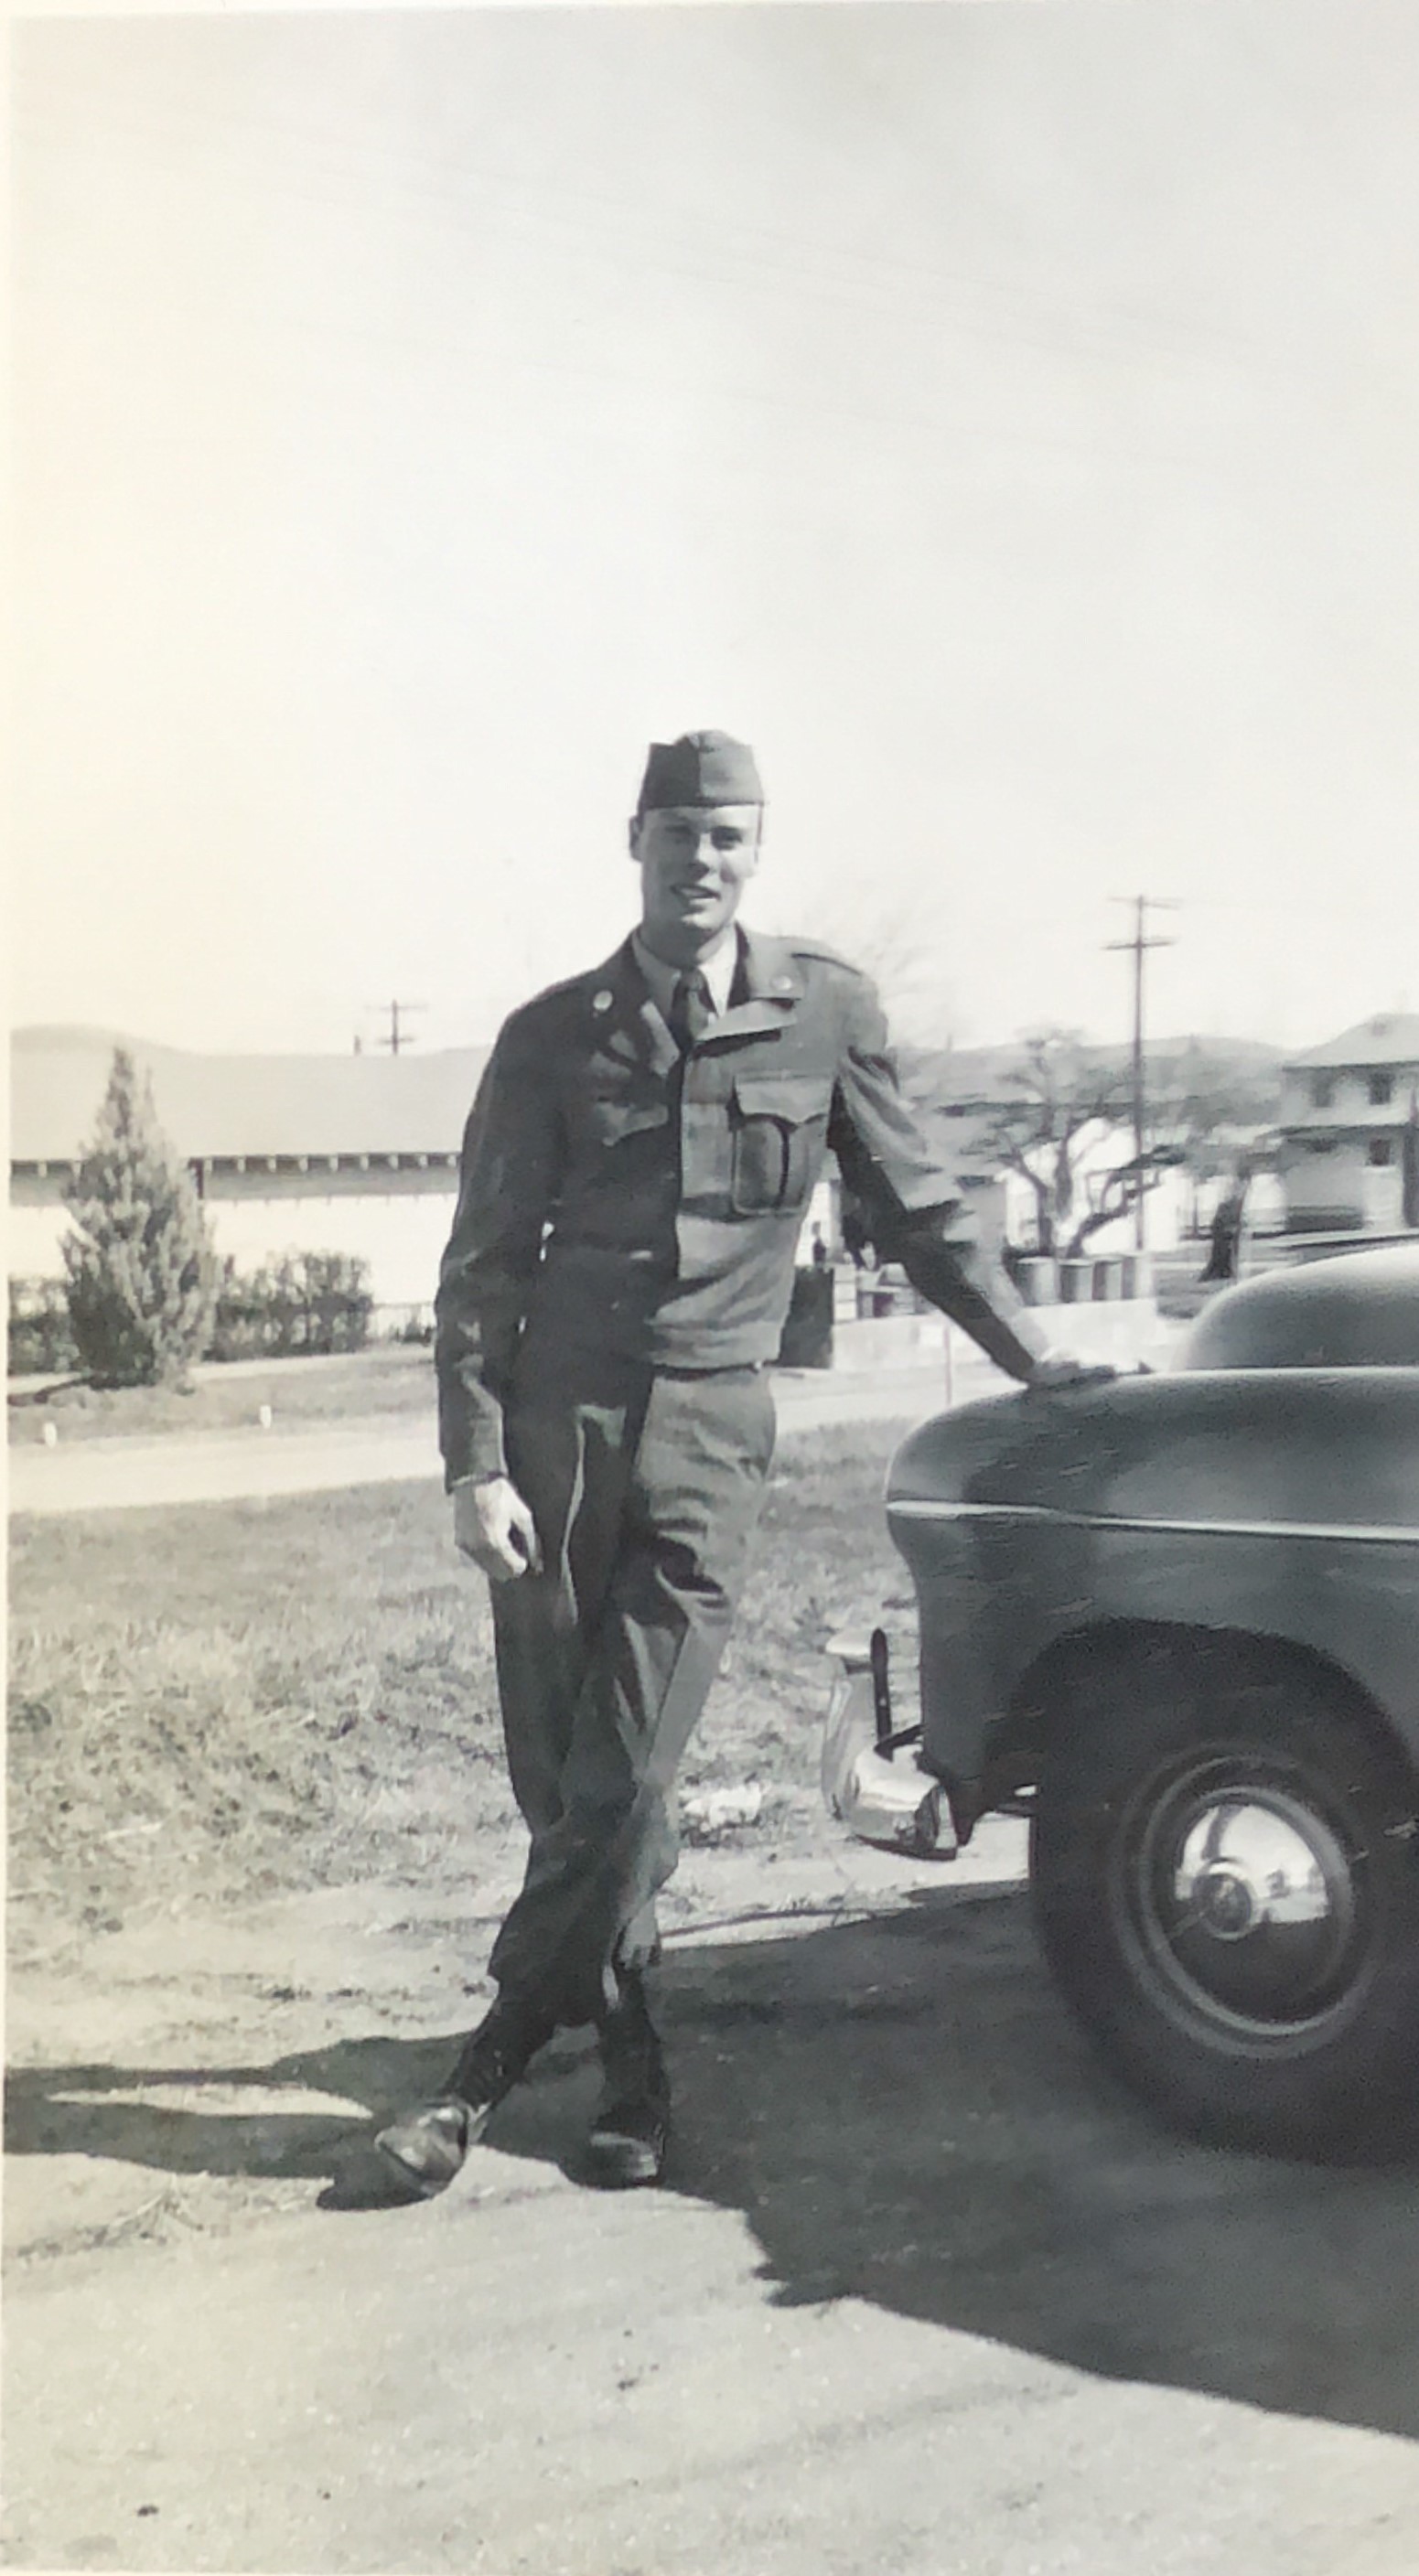  Bob at Camp Roberts, Calif., c. 1951-1952 